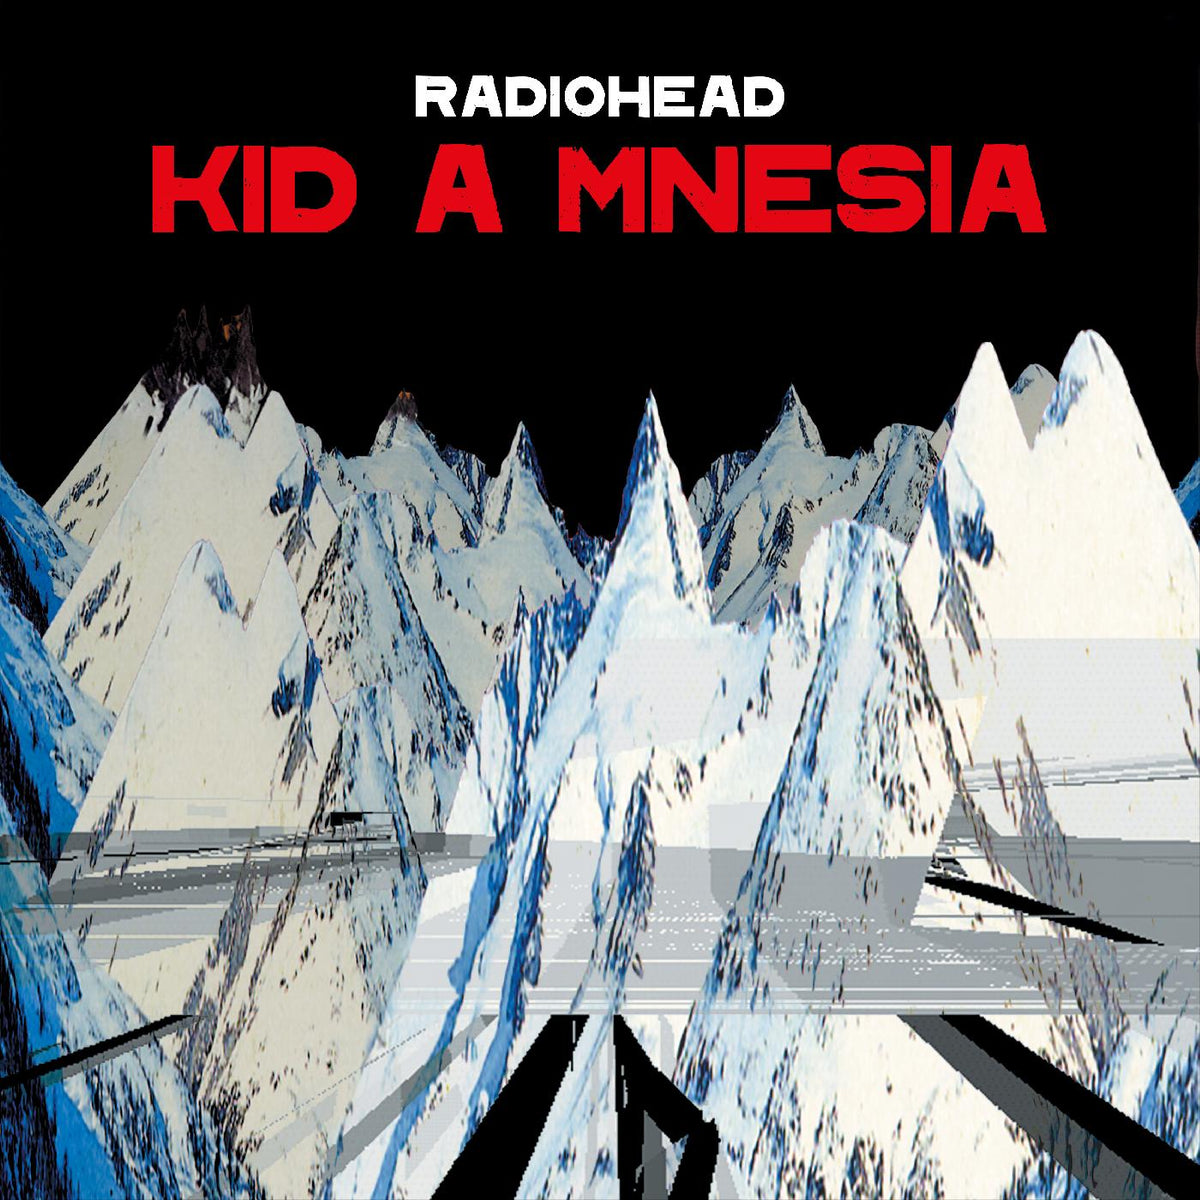 Radiohead - Kid A Mnesia (Gatefold LP Jacket) (3 Lp's) - Vinyl